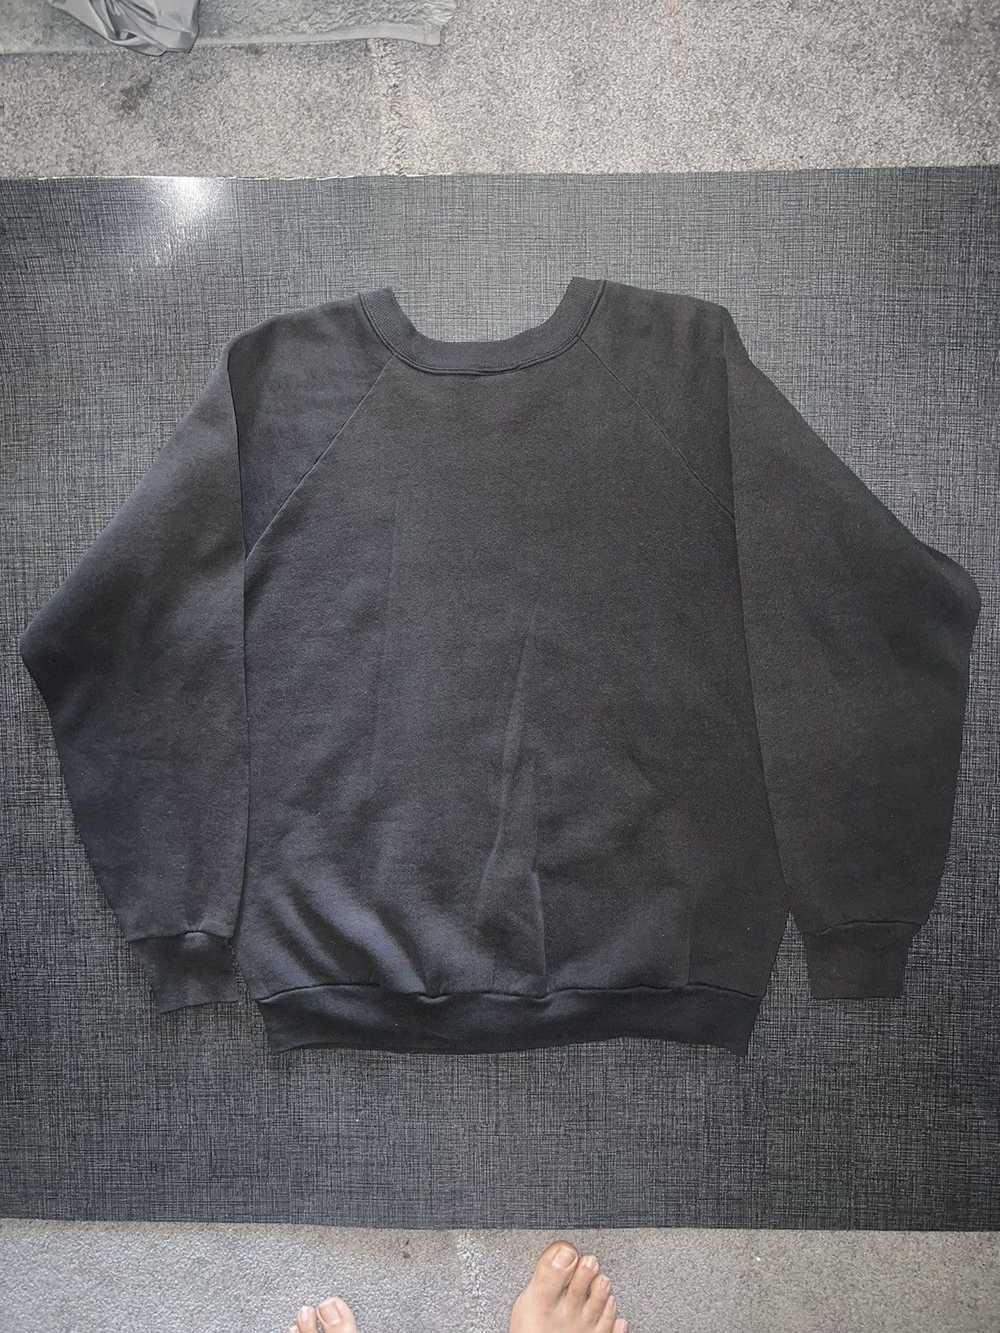 Other Luther vandeross Crewneck sweater - image 2